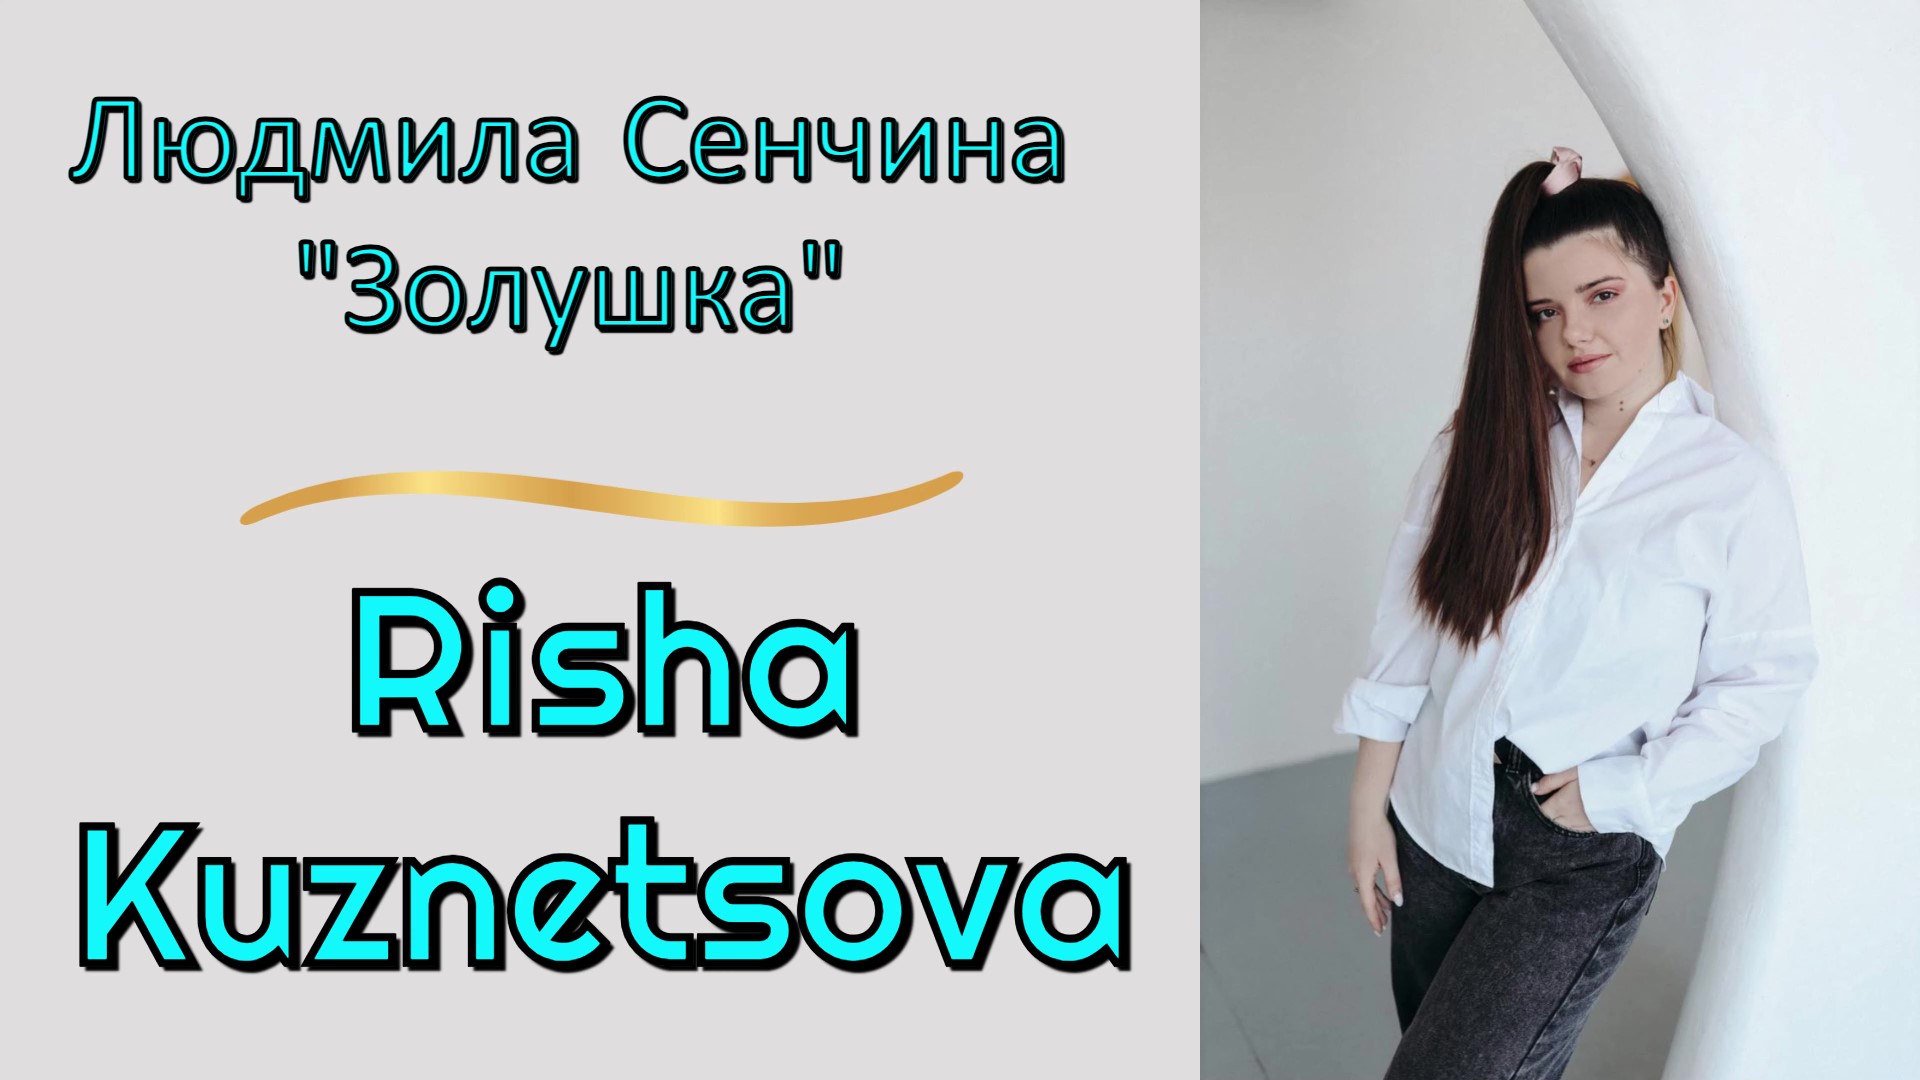 Risha Kuznetsova — «Золушка». Людмила Сенчина (Cover)👠👠👑 #stream #живойзвук #music #русскиепесни